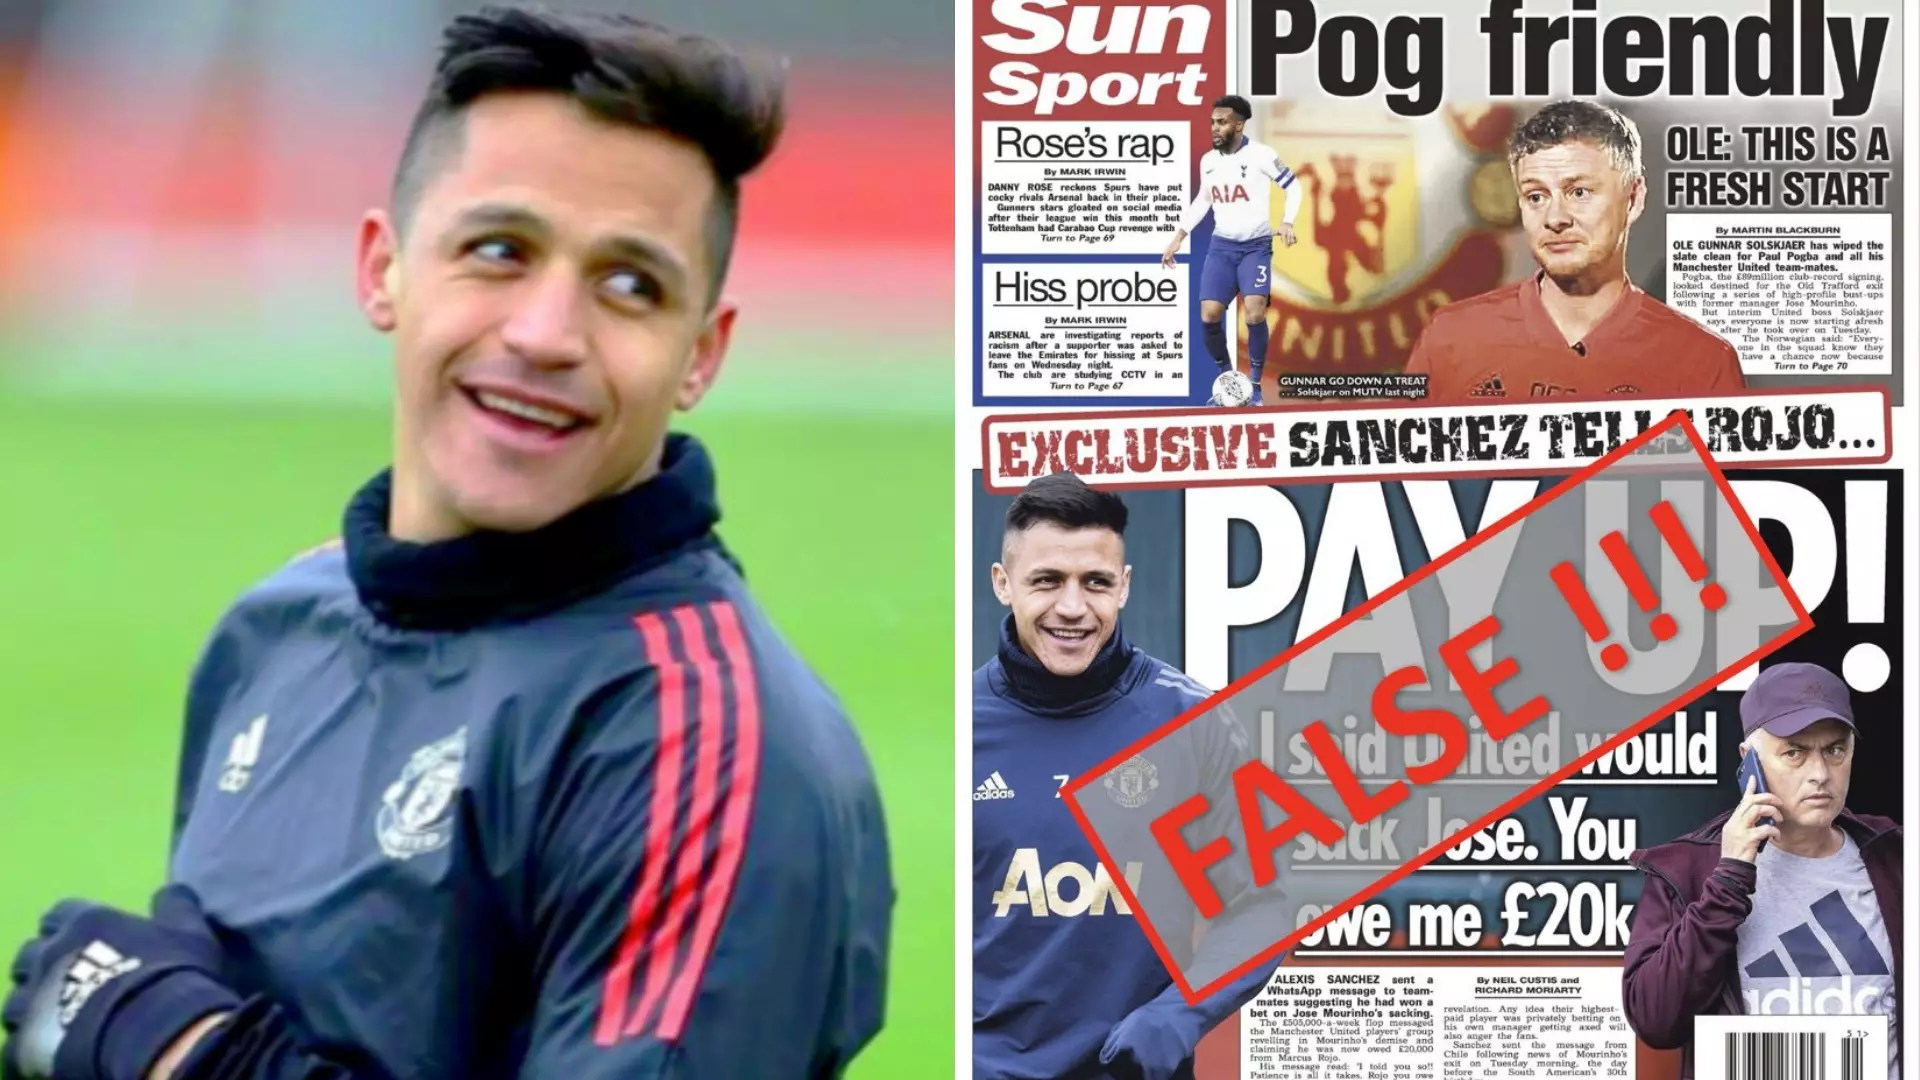 Alexis Sánchez Slams Report Claiming He Made £20k Bet On José Mourinho's Sacking